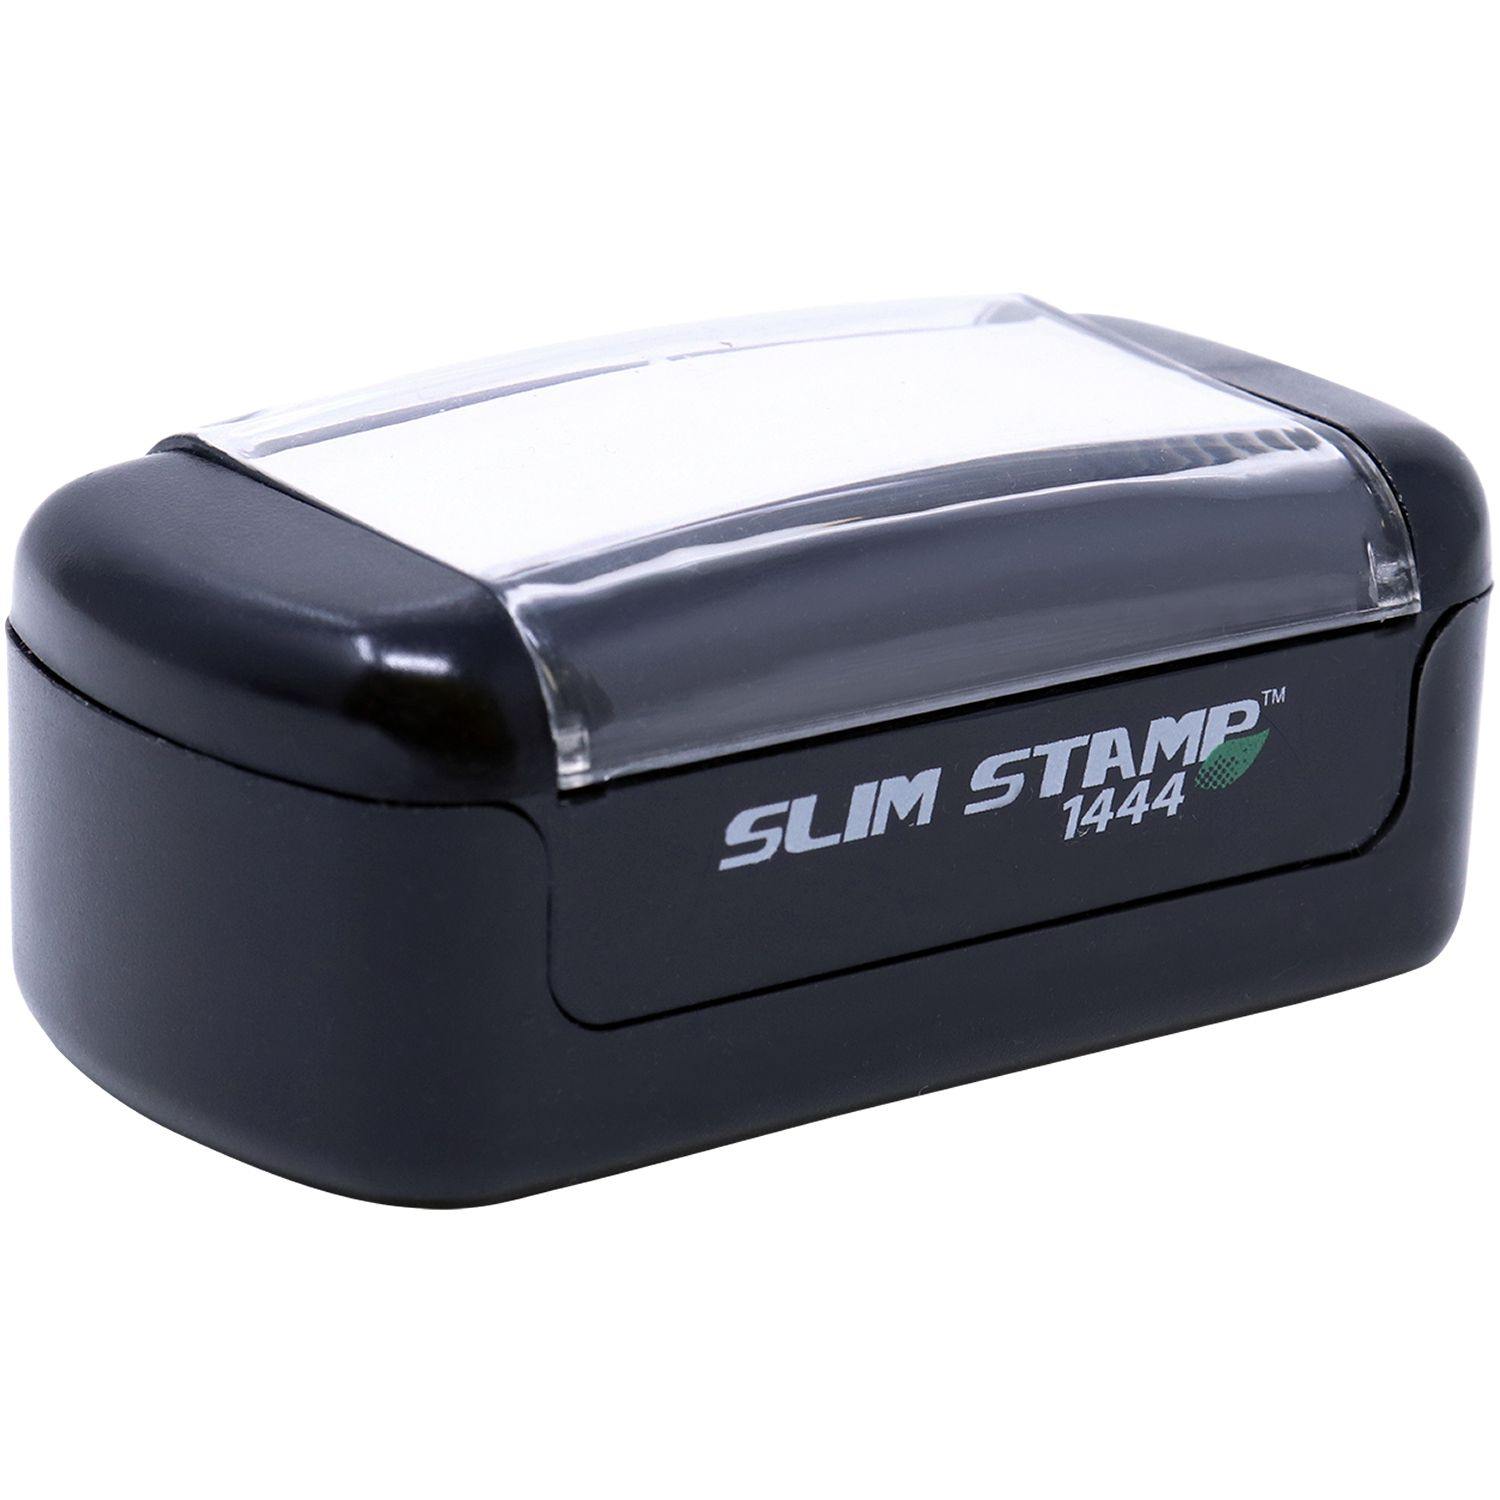 Alt View of Slim Pre Inked Super Homework Stamp Mount Angle